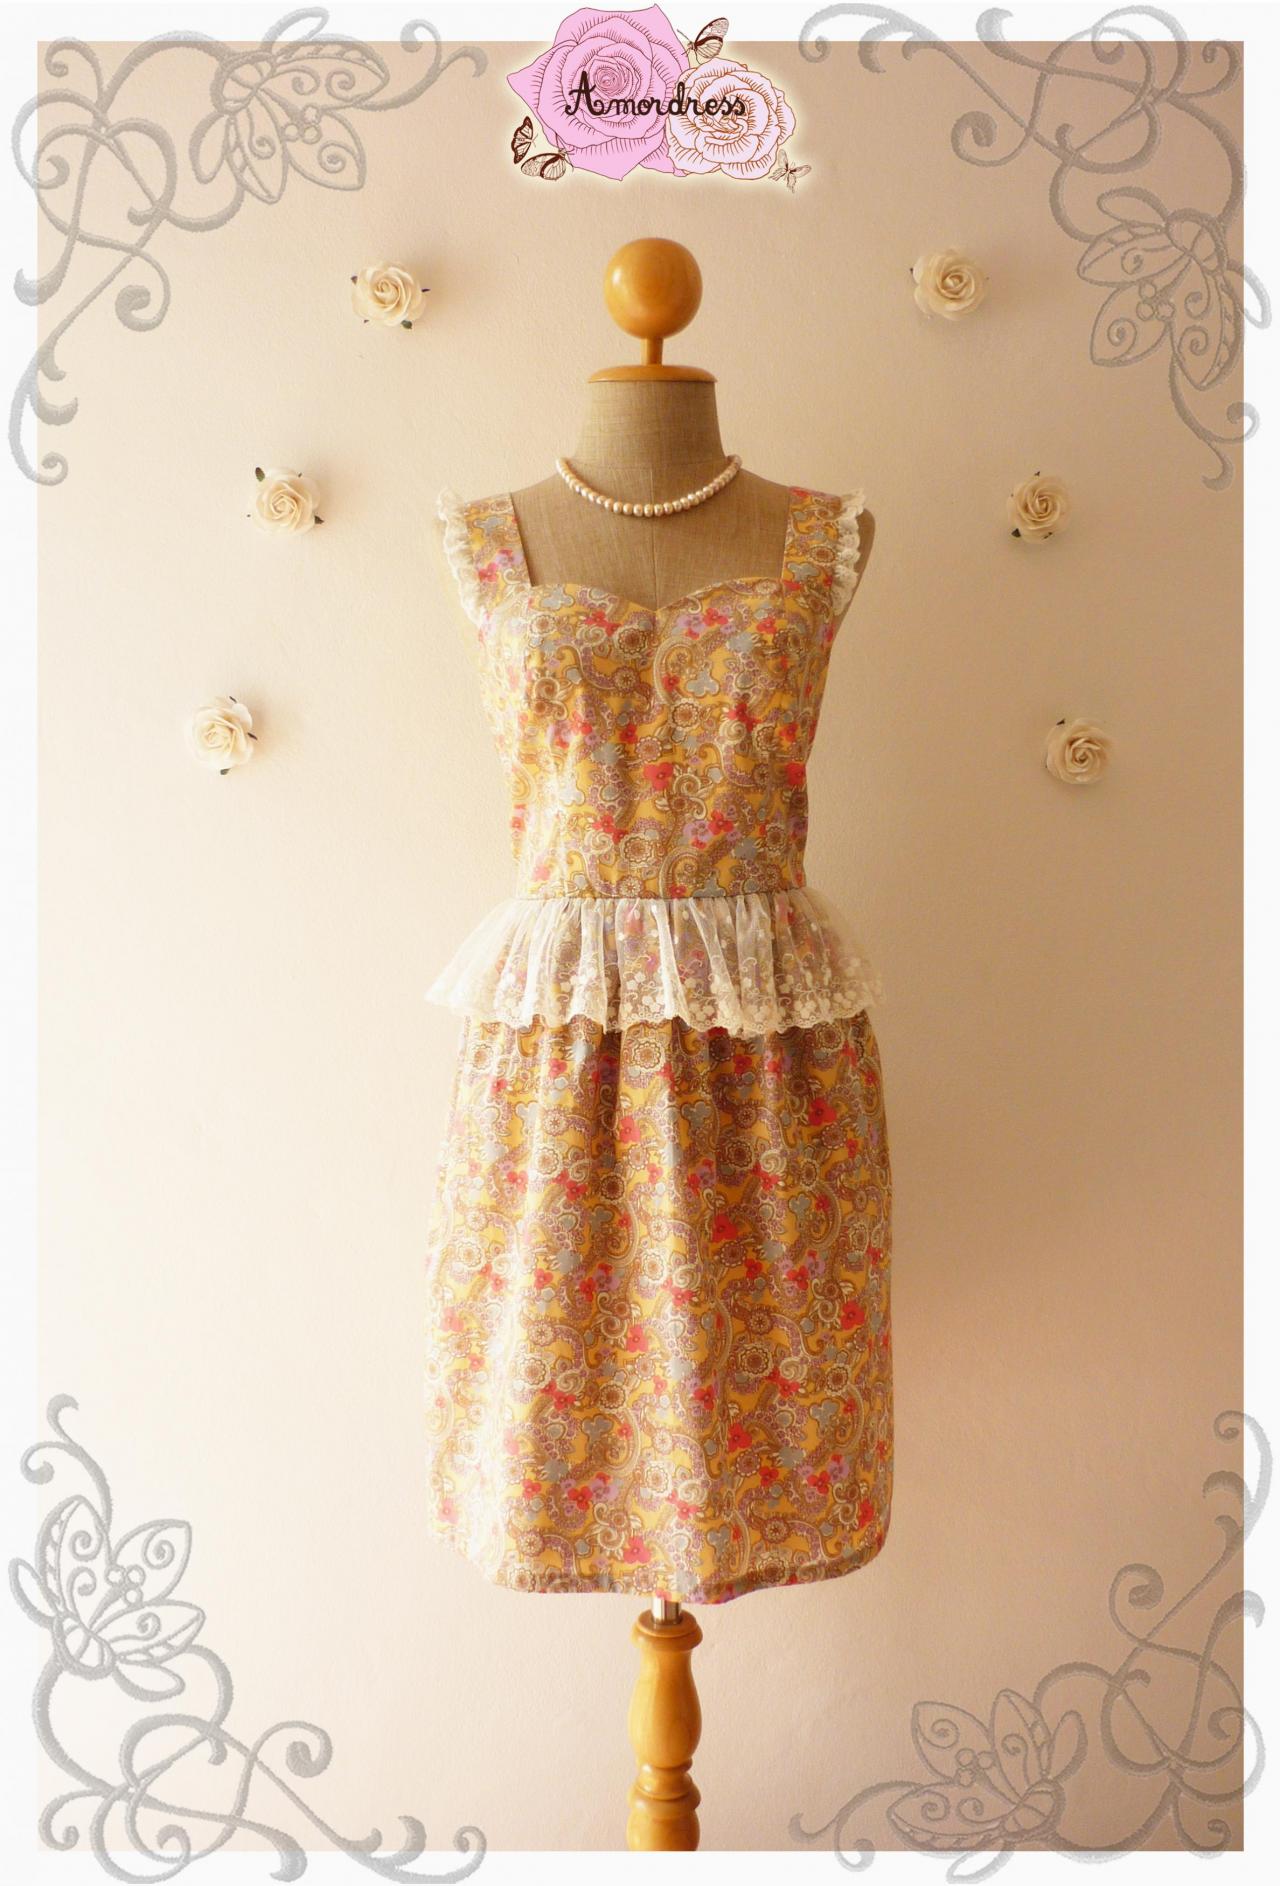 Angel Wing Sweet Dress Floral Dress Peplum Summer Dress Bridesmaid Dress Party Dress Vintage Inspired Dress -Size XS, S, M, L, XL,